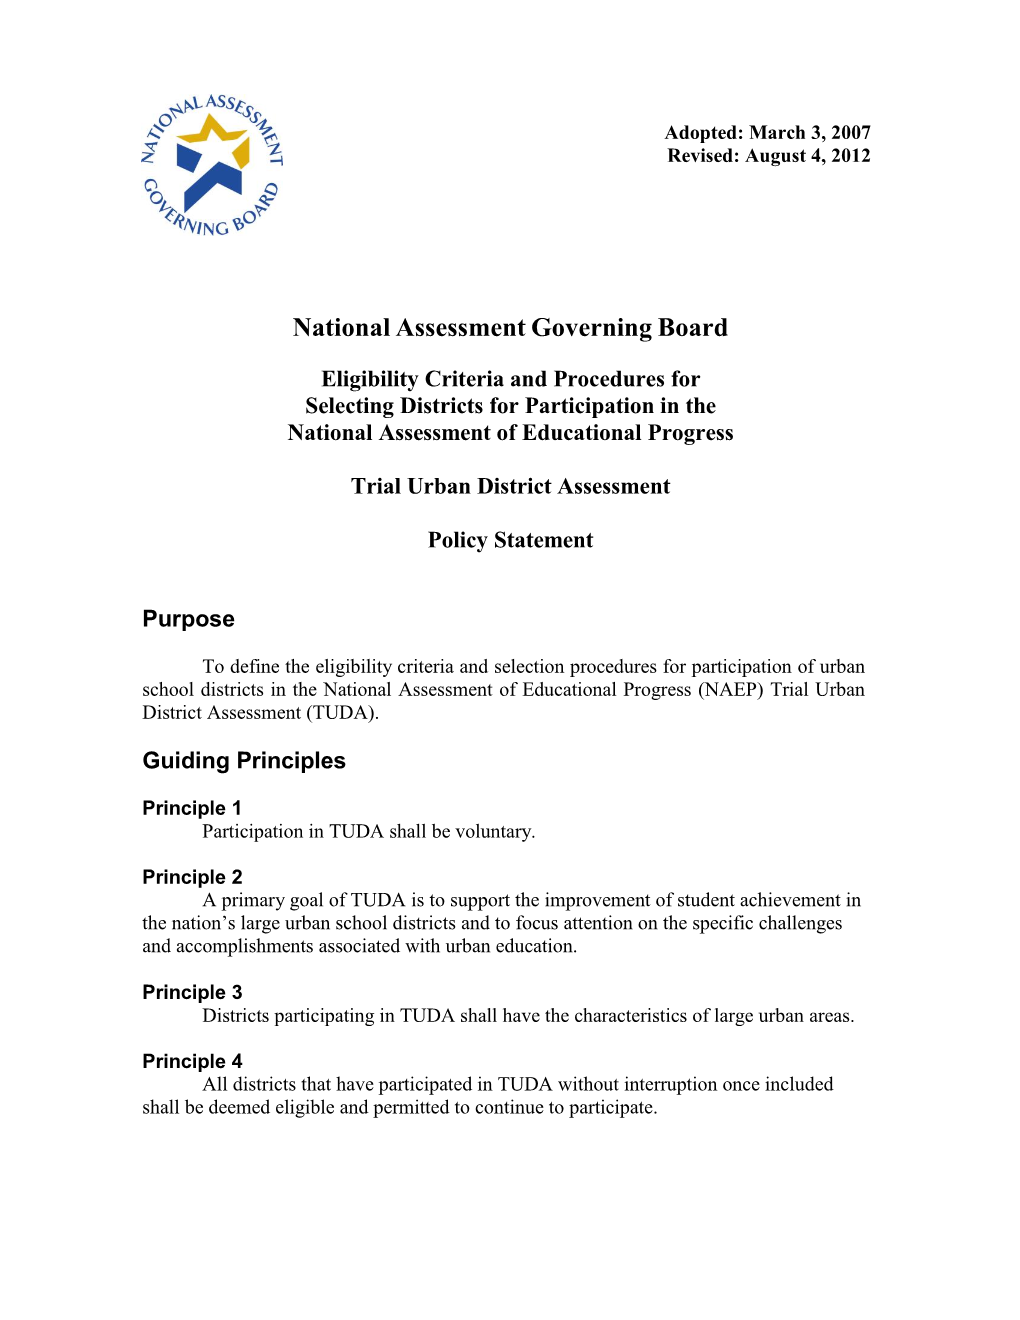 National Assessment Governing Board